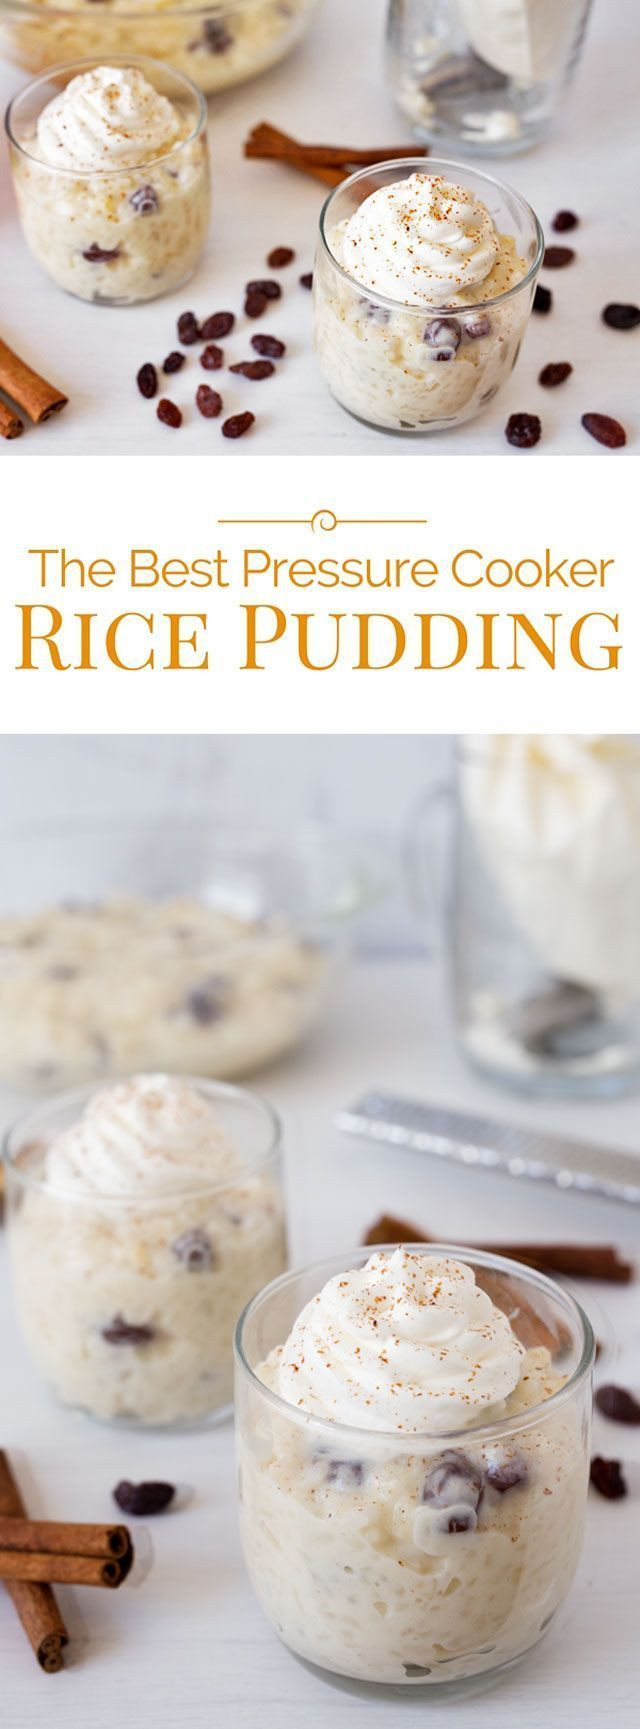 Pressure Cooker Desserts Recipes
 The Best Pressure Cooker Instant Pot Rice Pudding Recipe